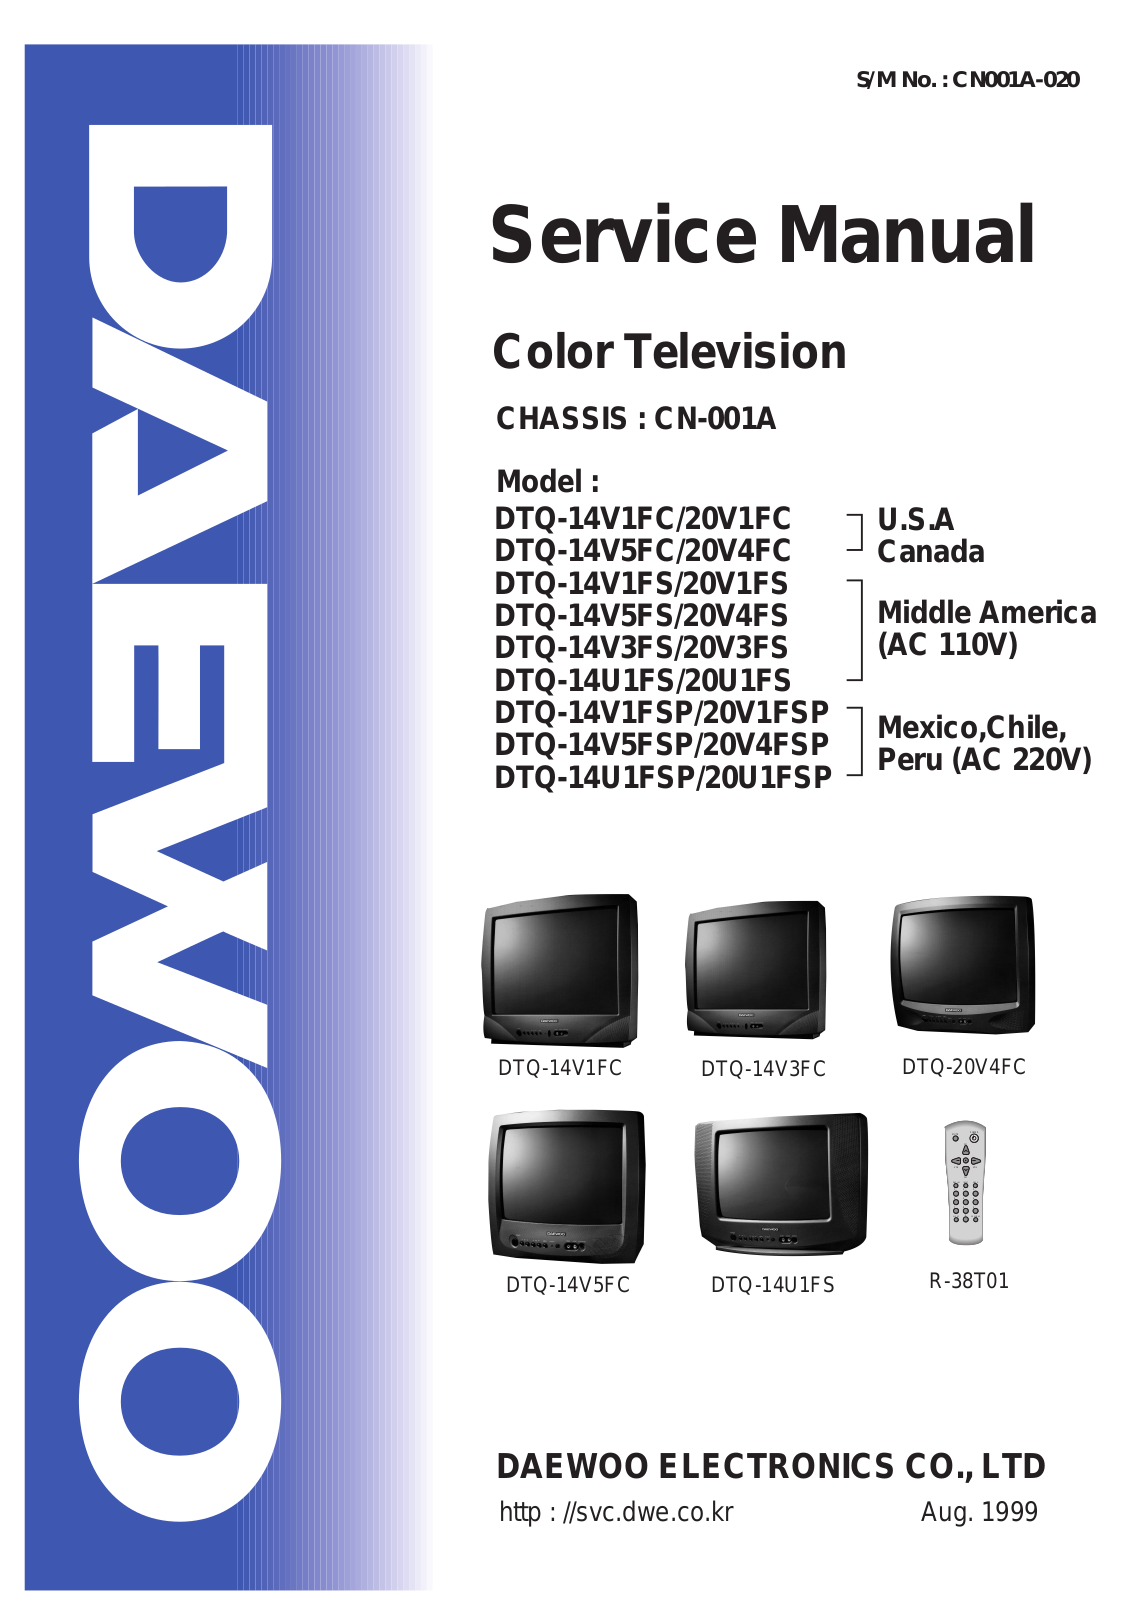 Daewoo cn-001a Service Manual